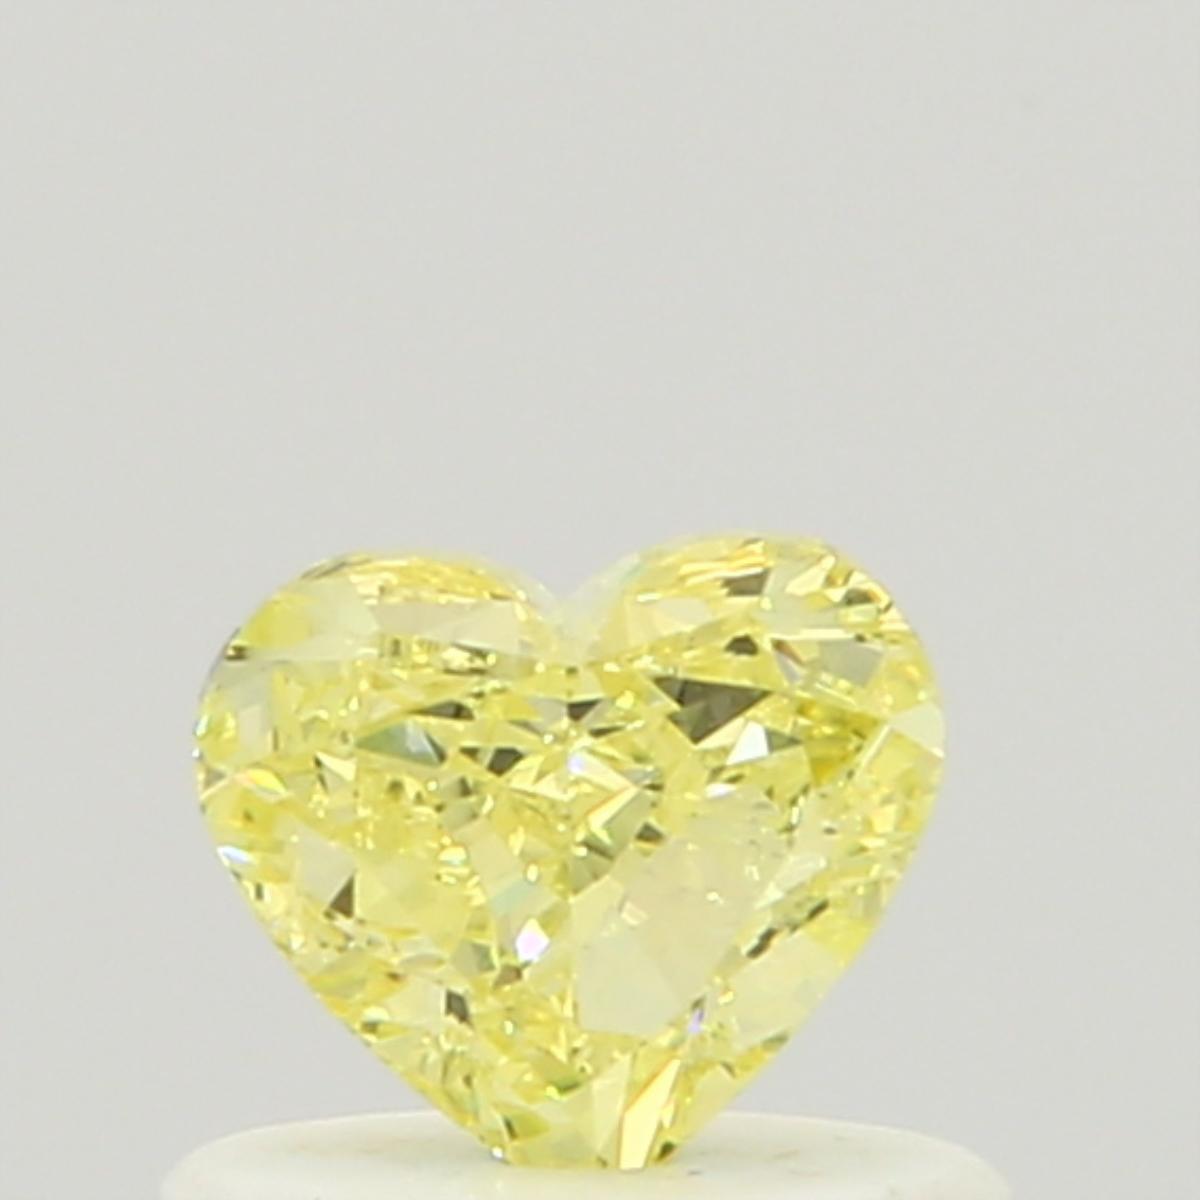 0.49 Carat Heart Cut Natural Diamond